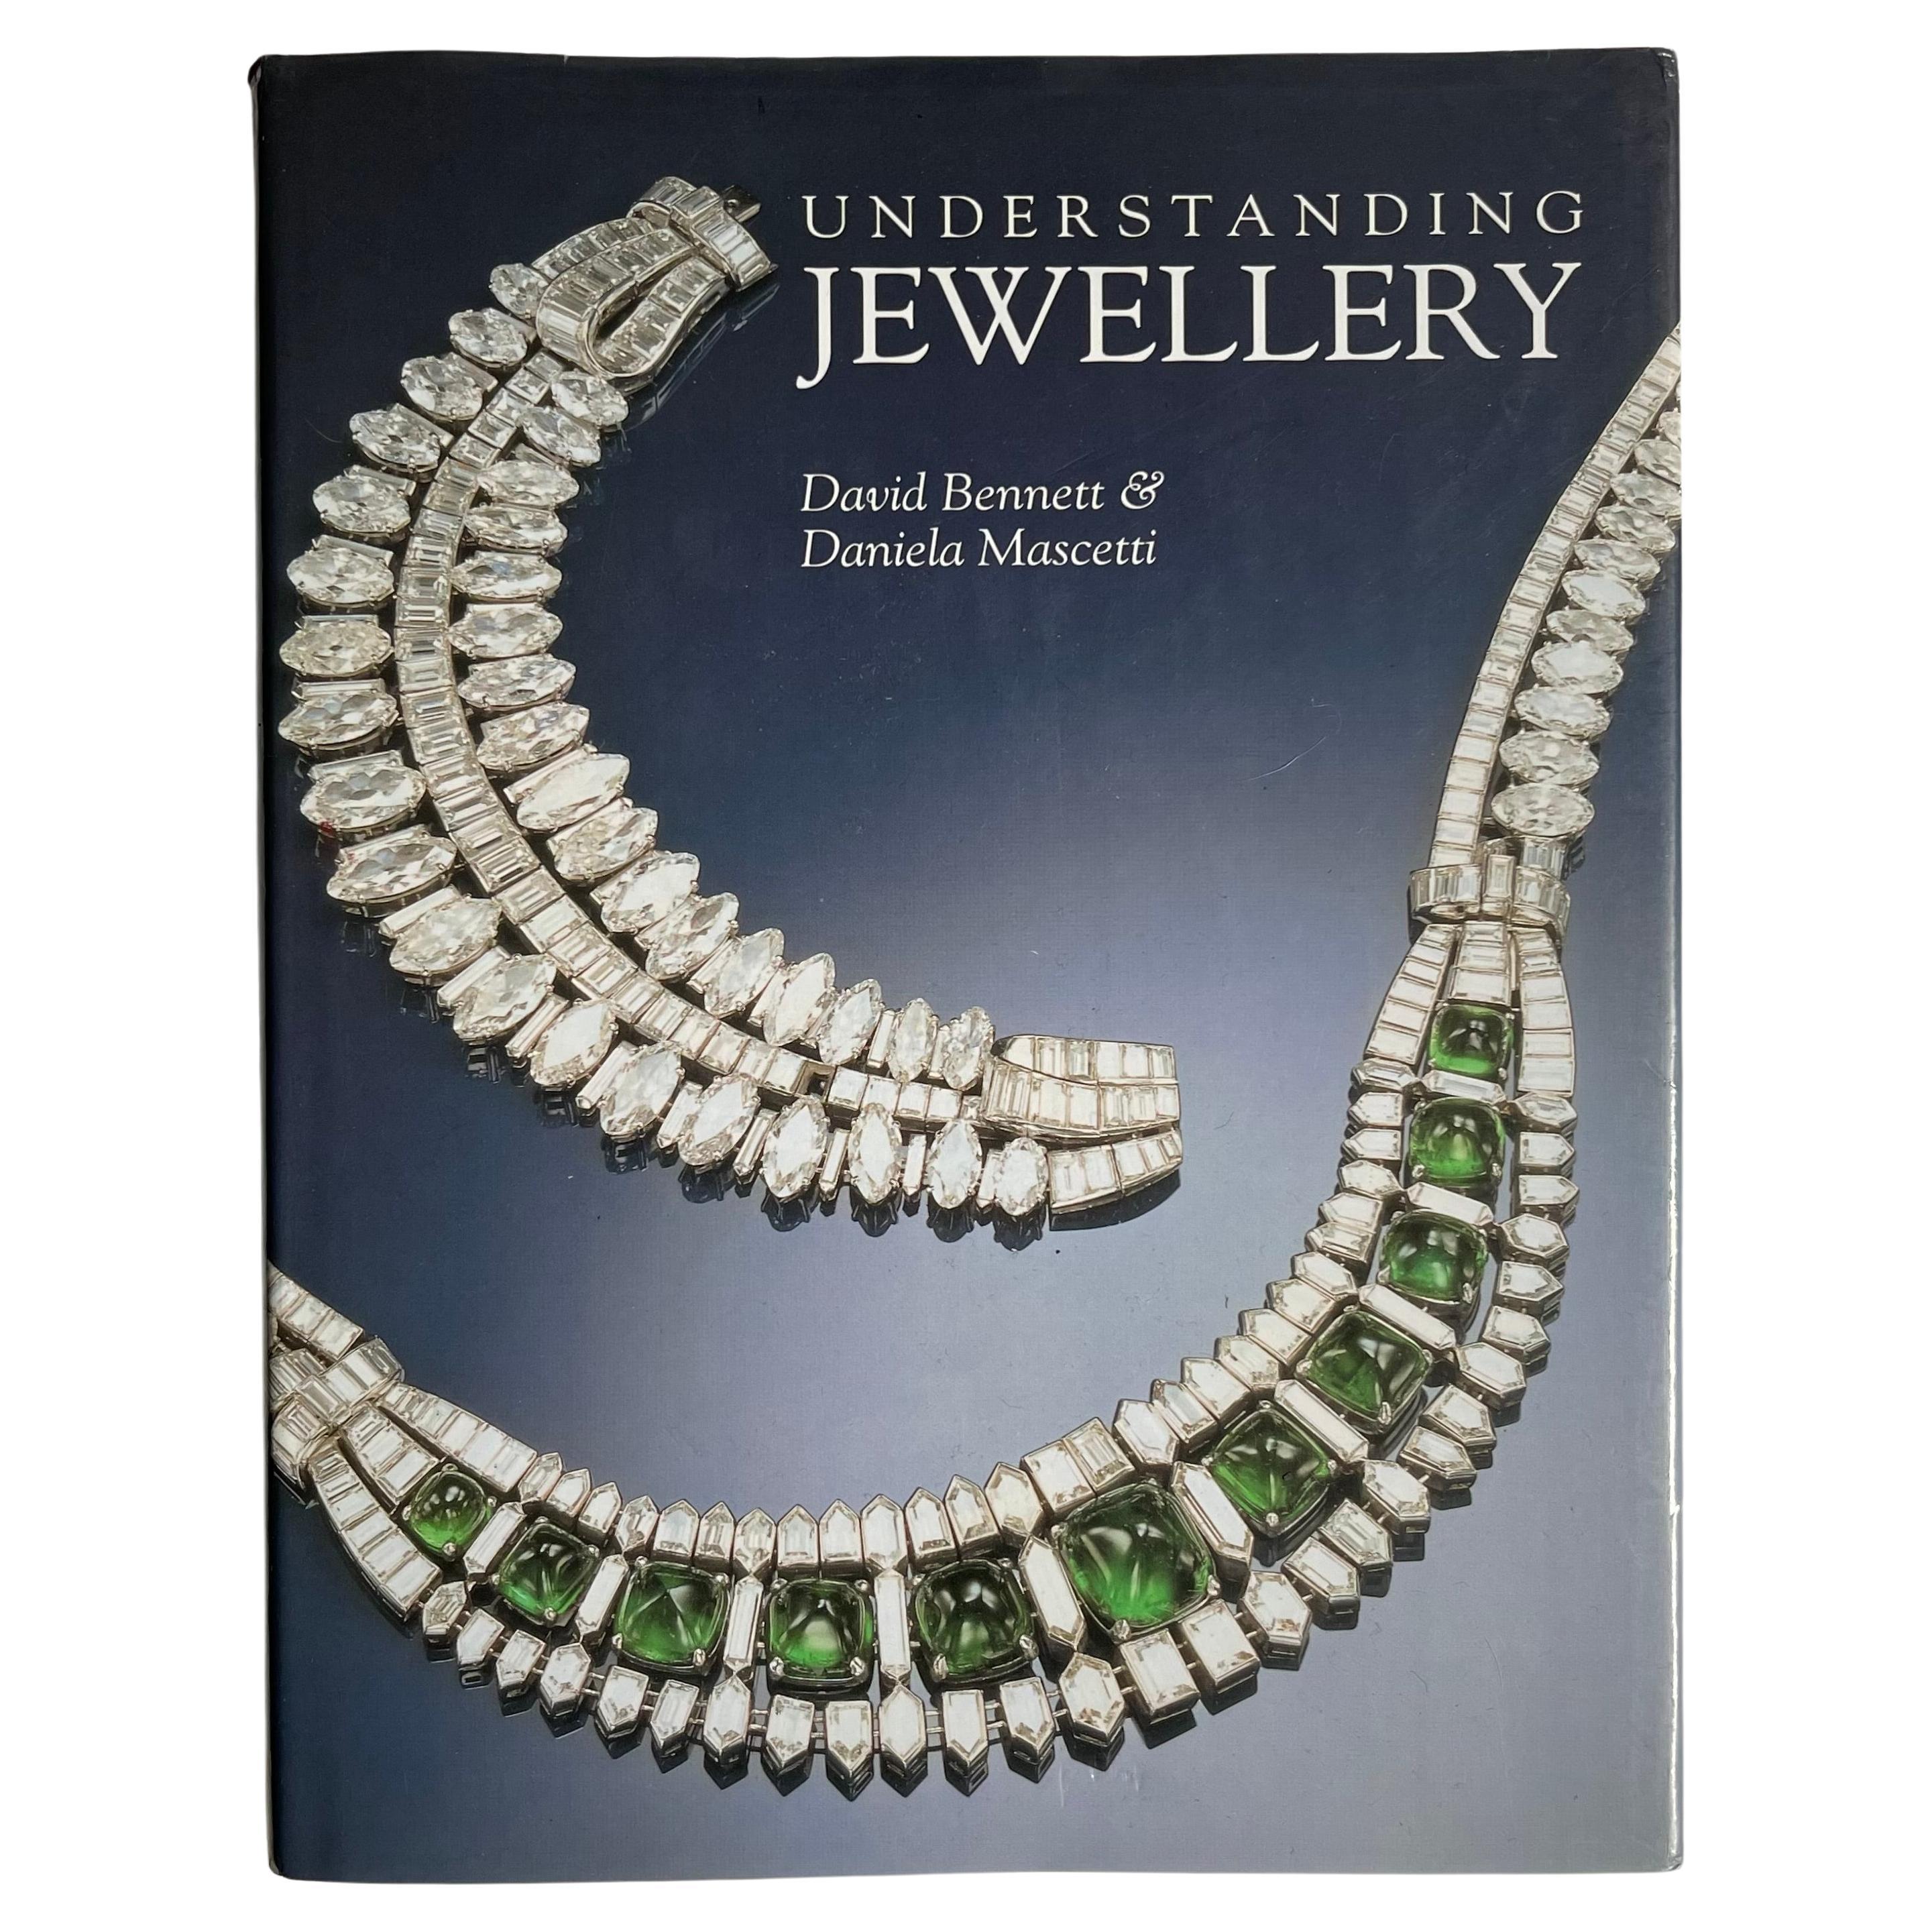 Understanding Jewellery - David Bennett & Daniela Mascetti - 1994 For Sale